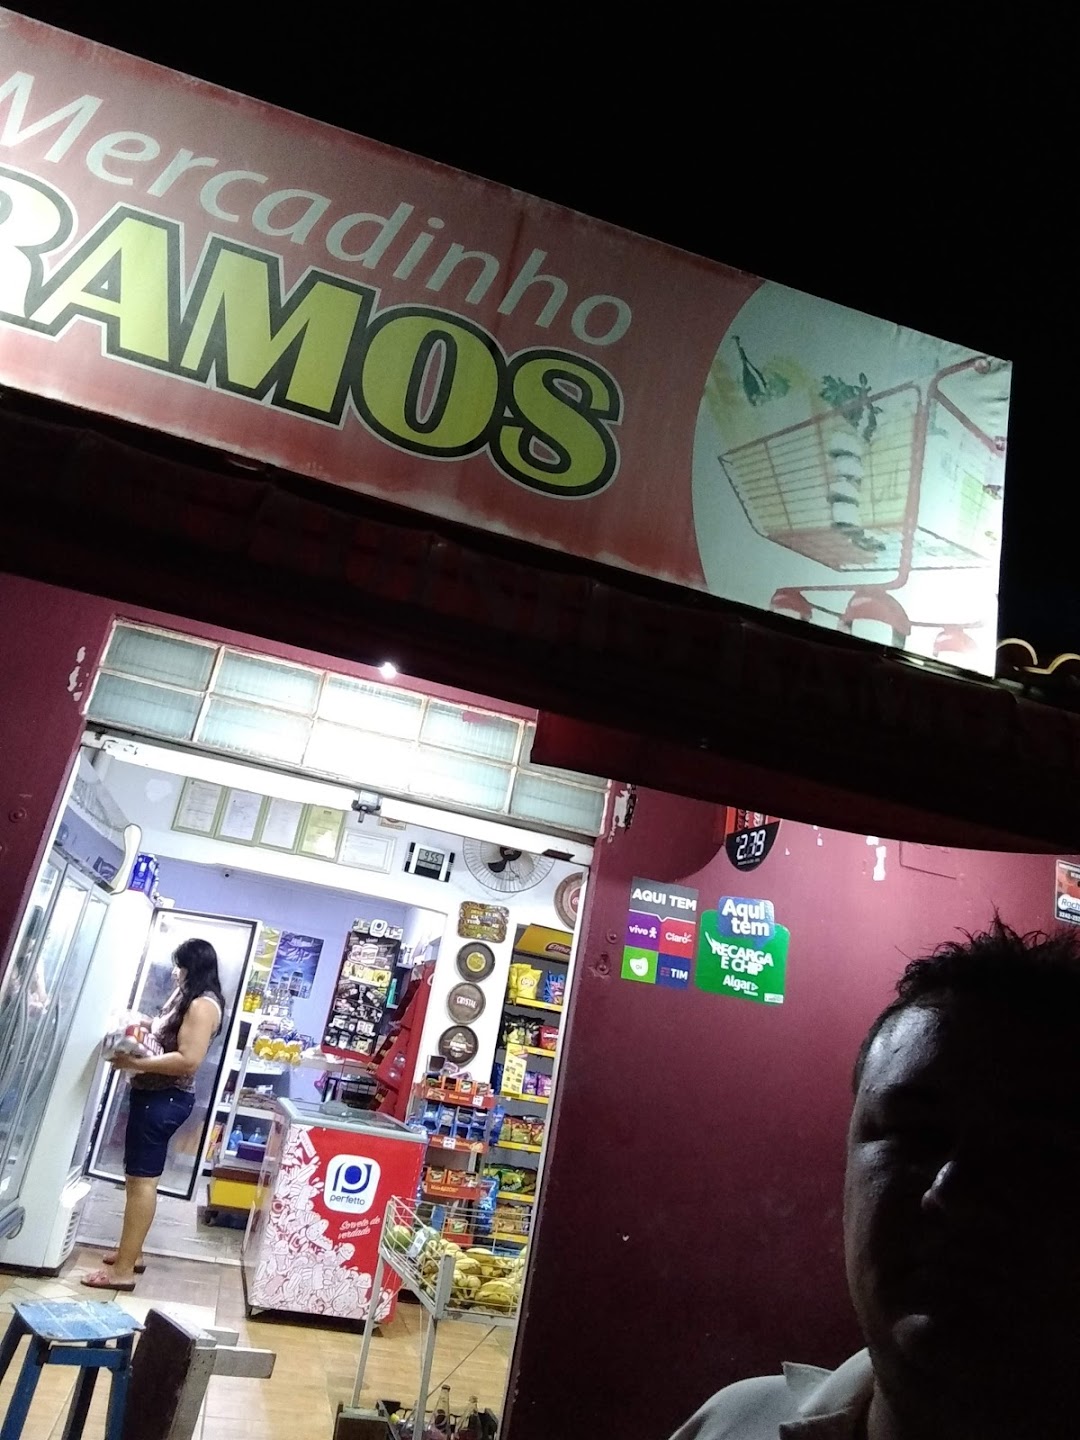 Mercadinho Ramos